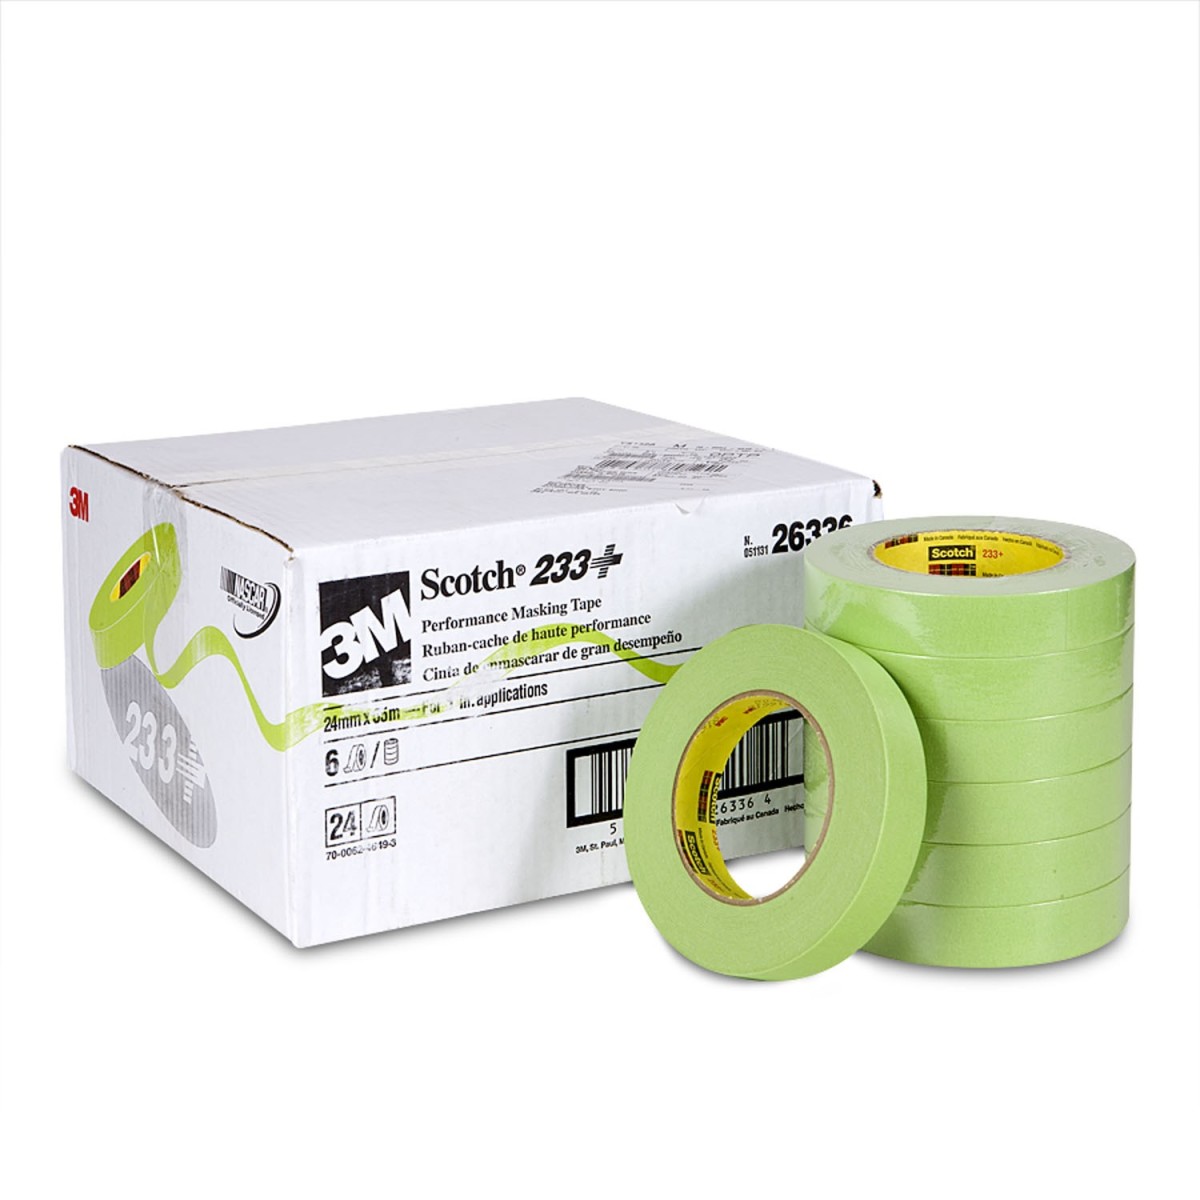 3m 26336 Scotch Green Masking Tape 233 24mm 1 Case Of 24 Rolls Free Shipping